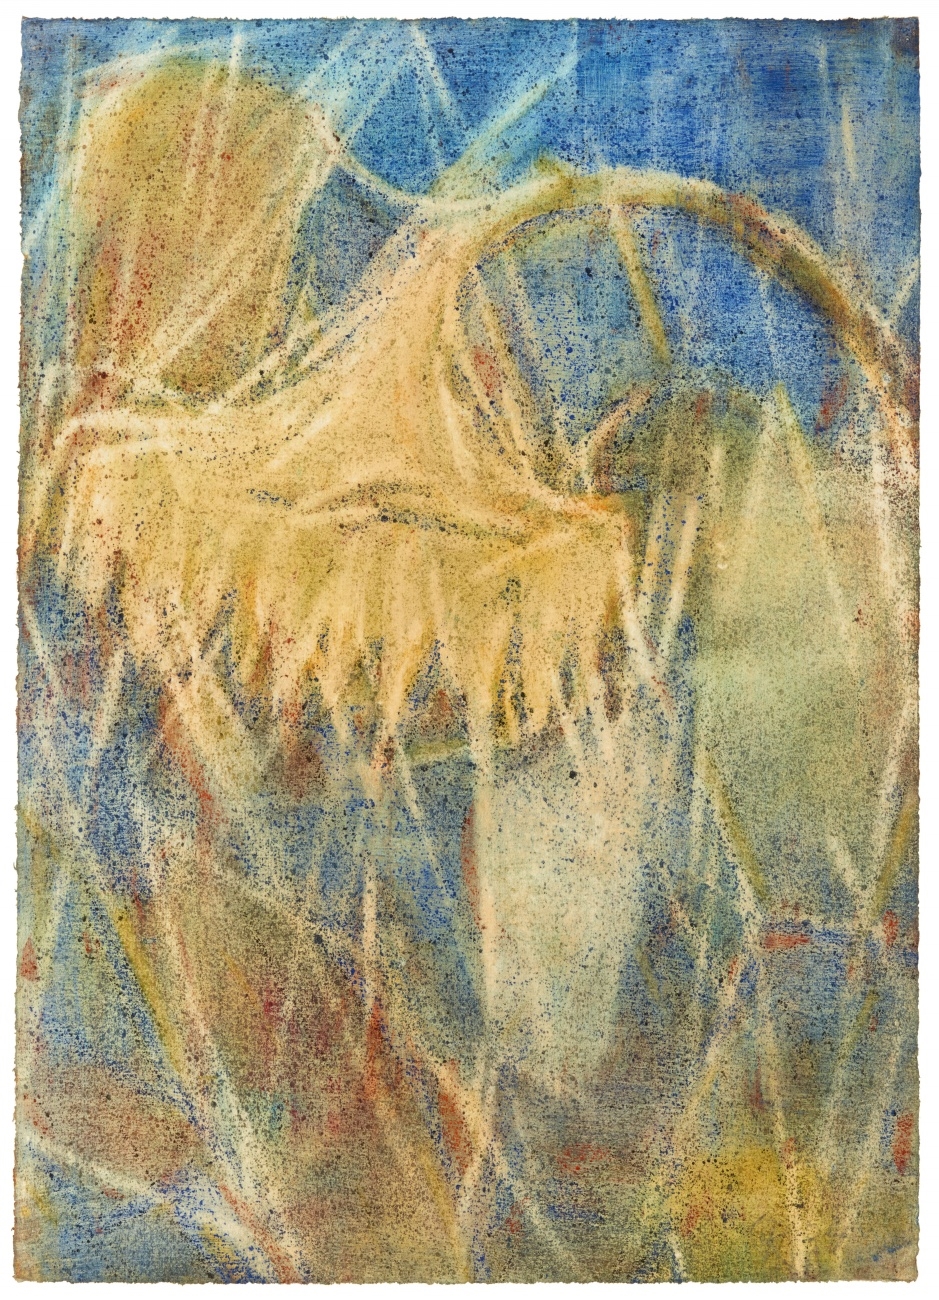 Christian Rohlfs, Sonnenblume (Sonnenblumenkopf) (1934)